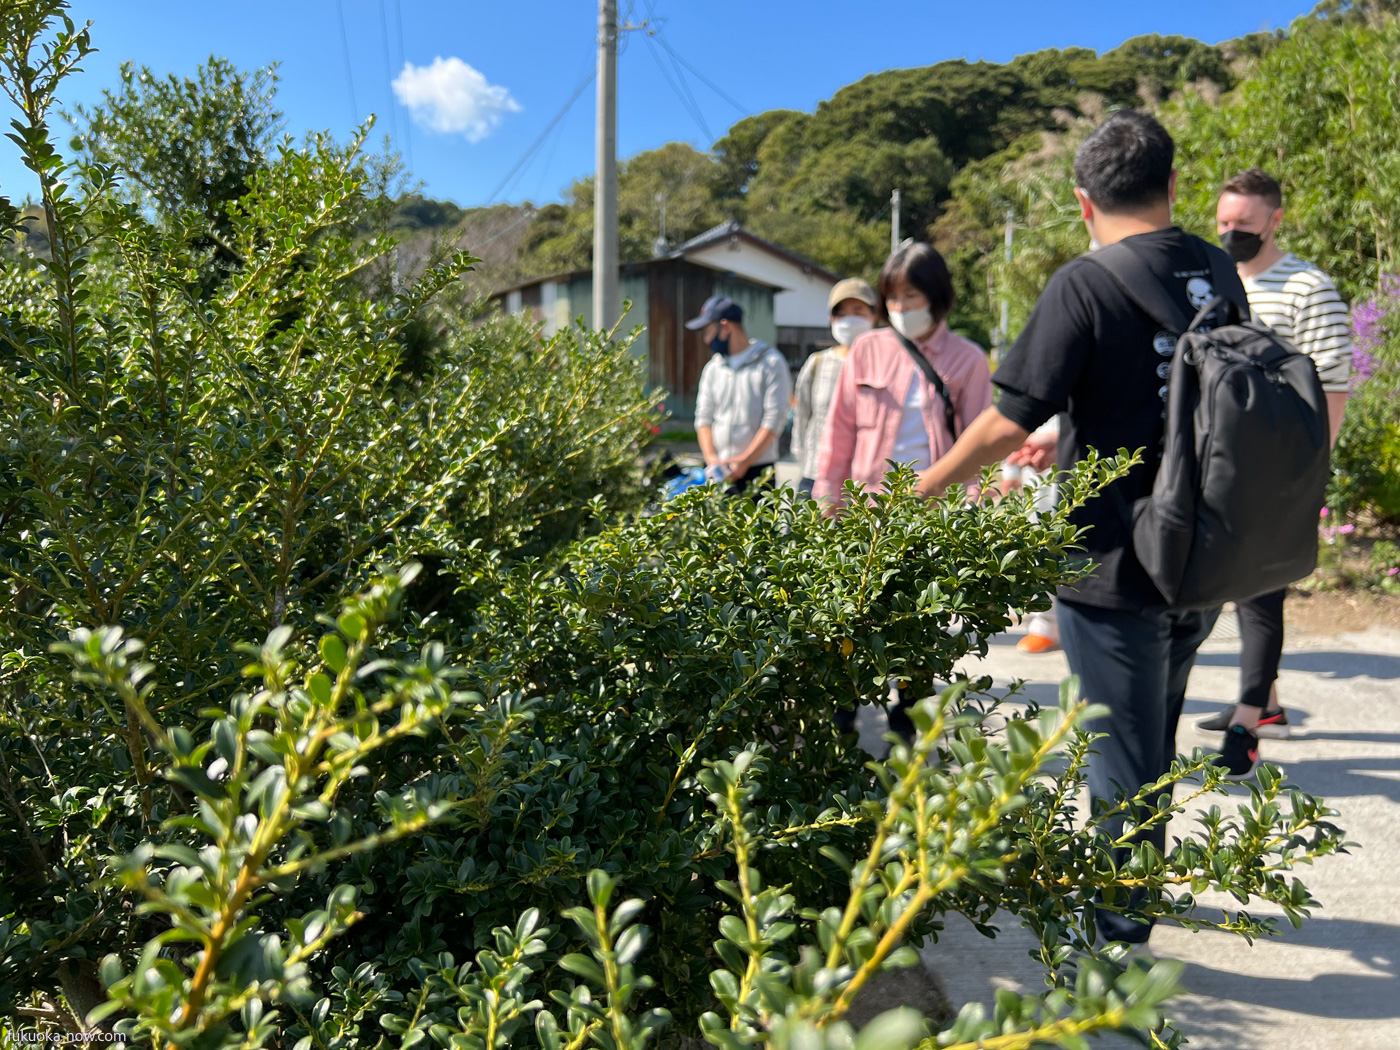 Japanese holly bush (Inutsuge), イカ籠漁で使うイヌツゲ を見学するうお旅